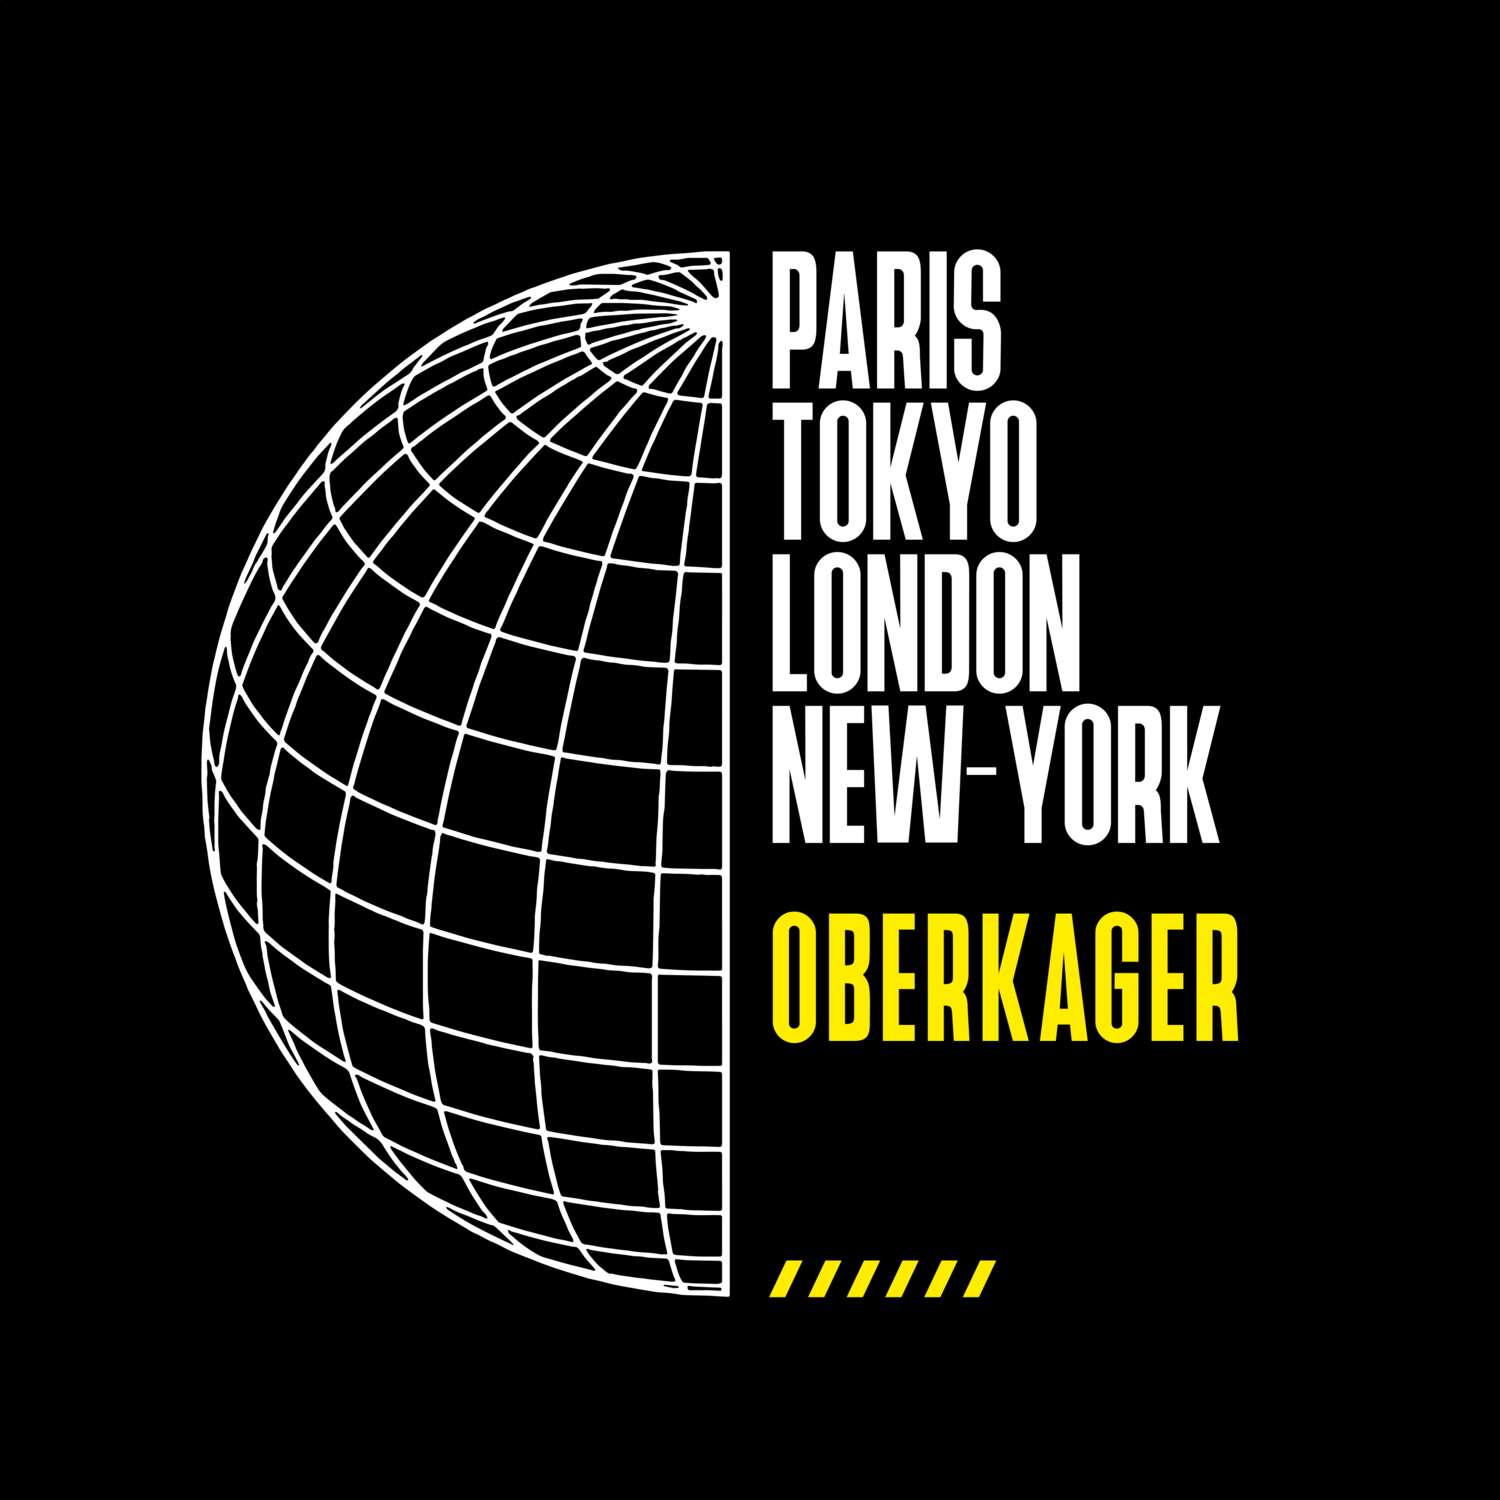 Oberkager T-Shirt »Paris Tokyo London«